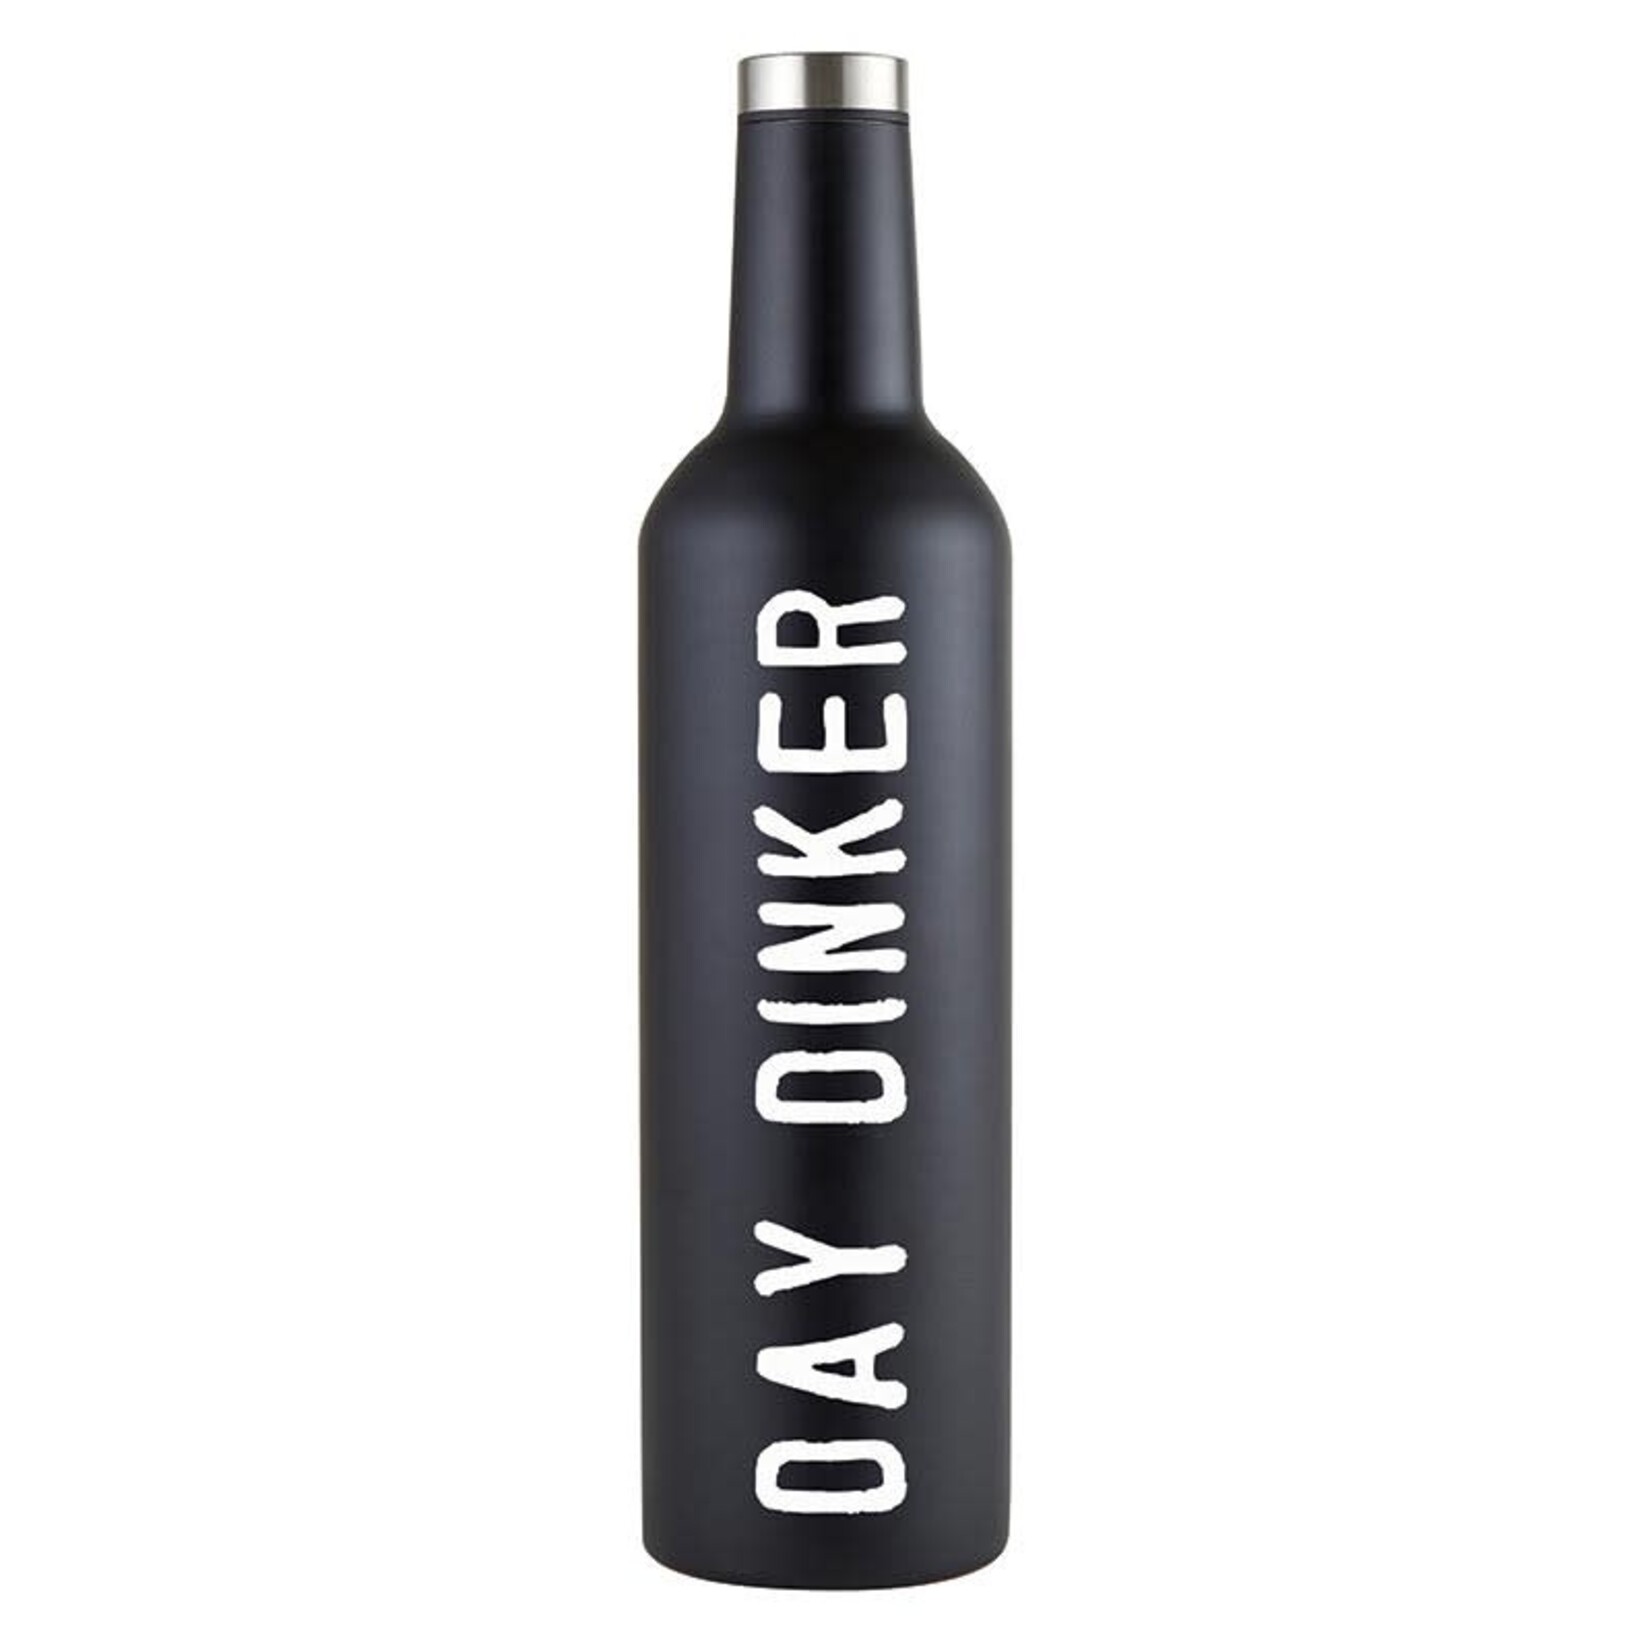 Stainless Steel Wine Bottle - Day Dinker